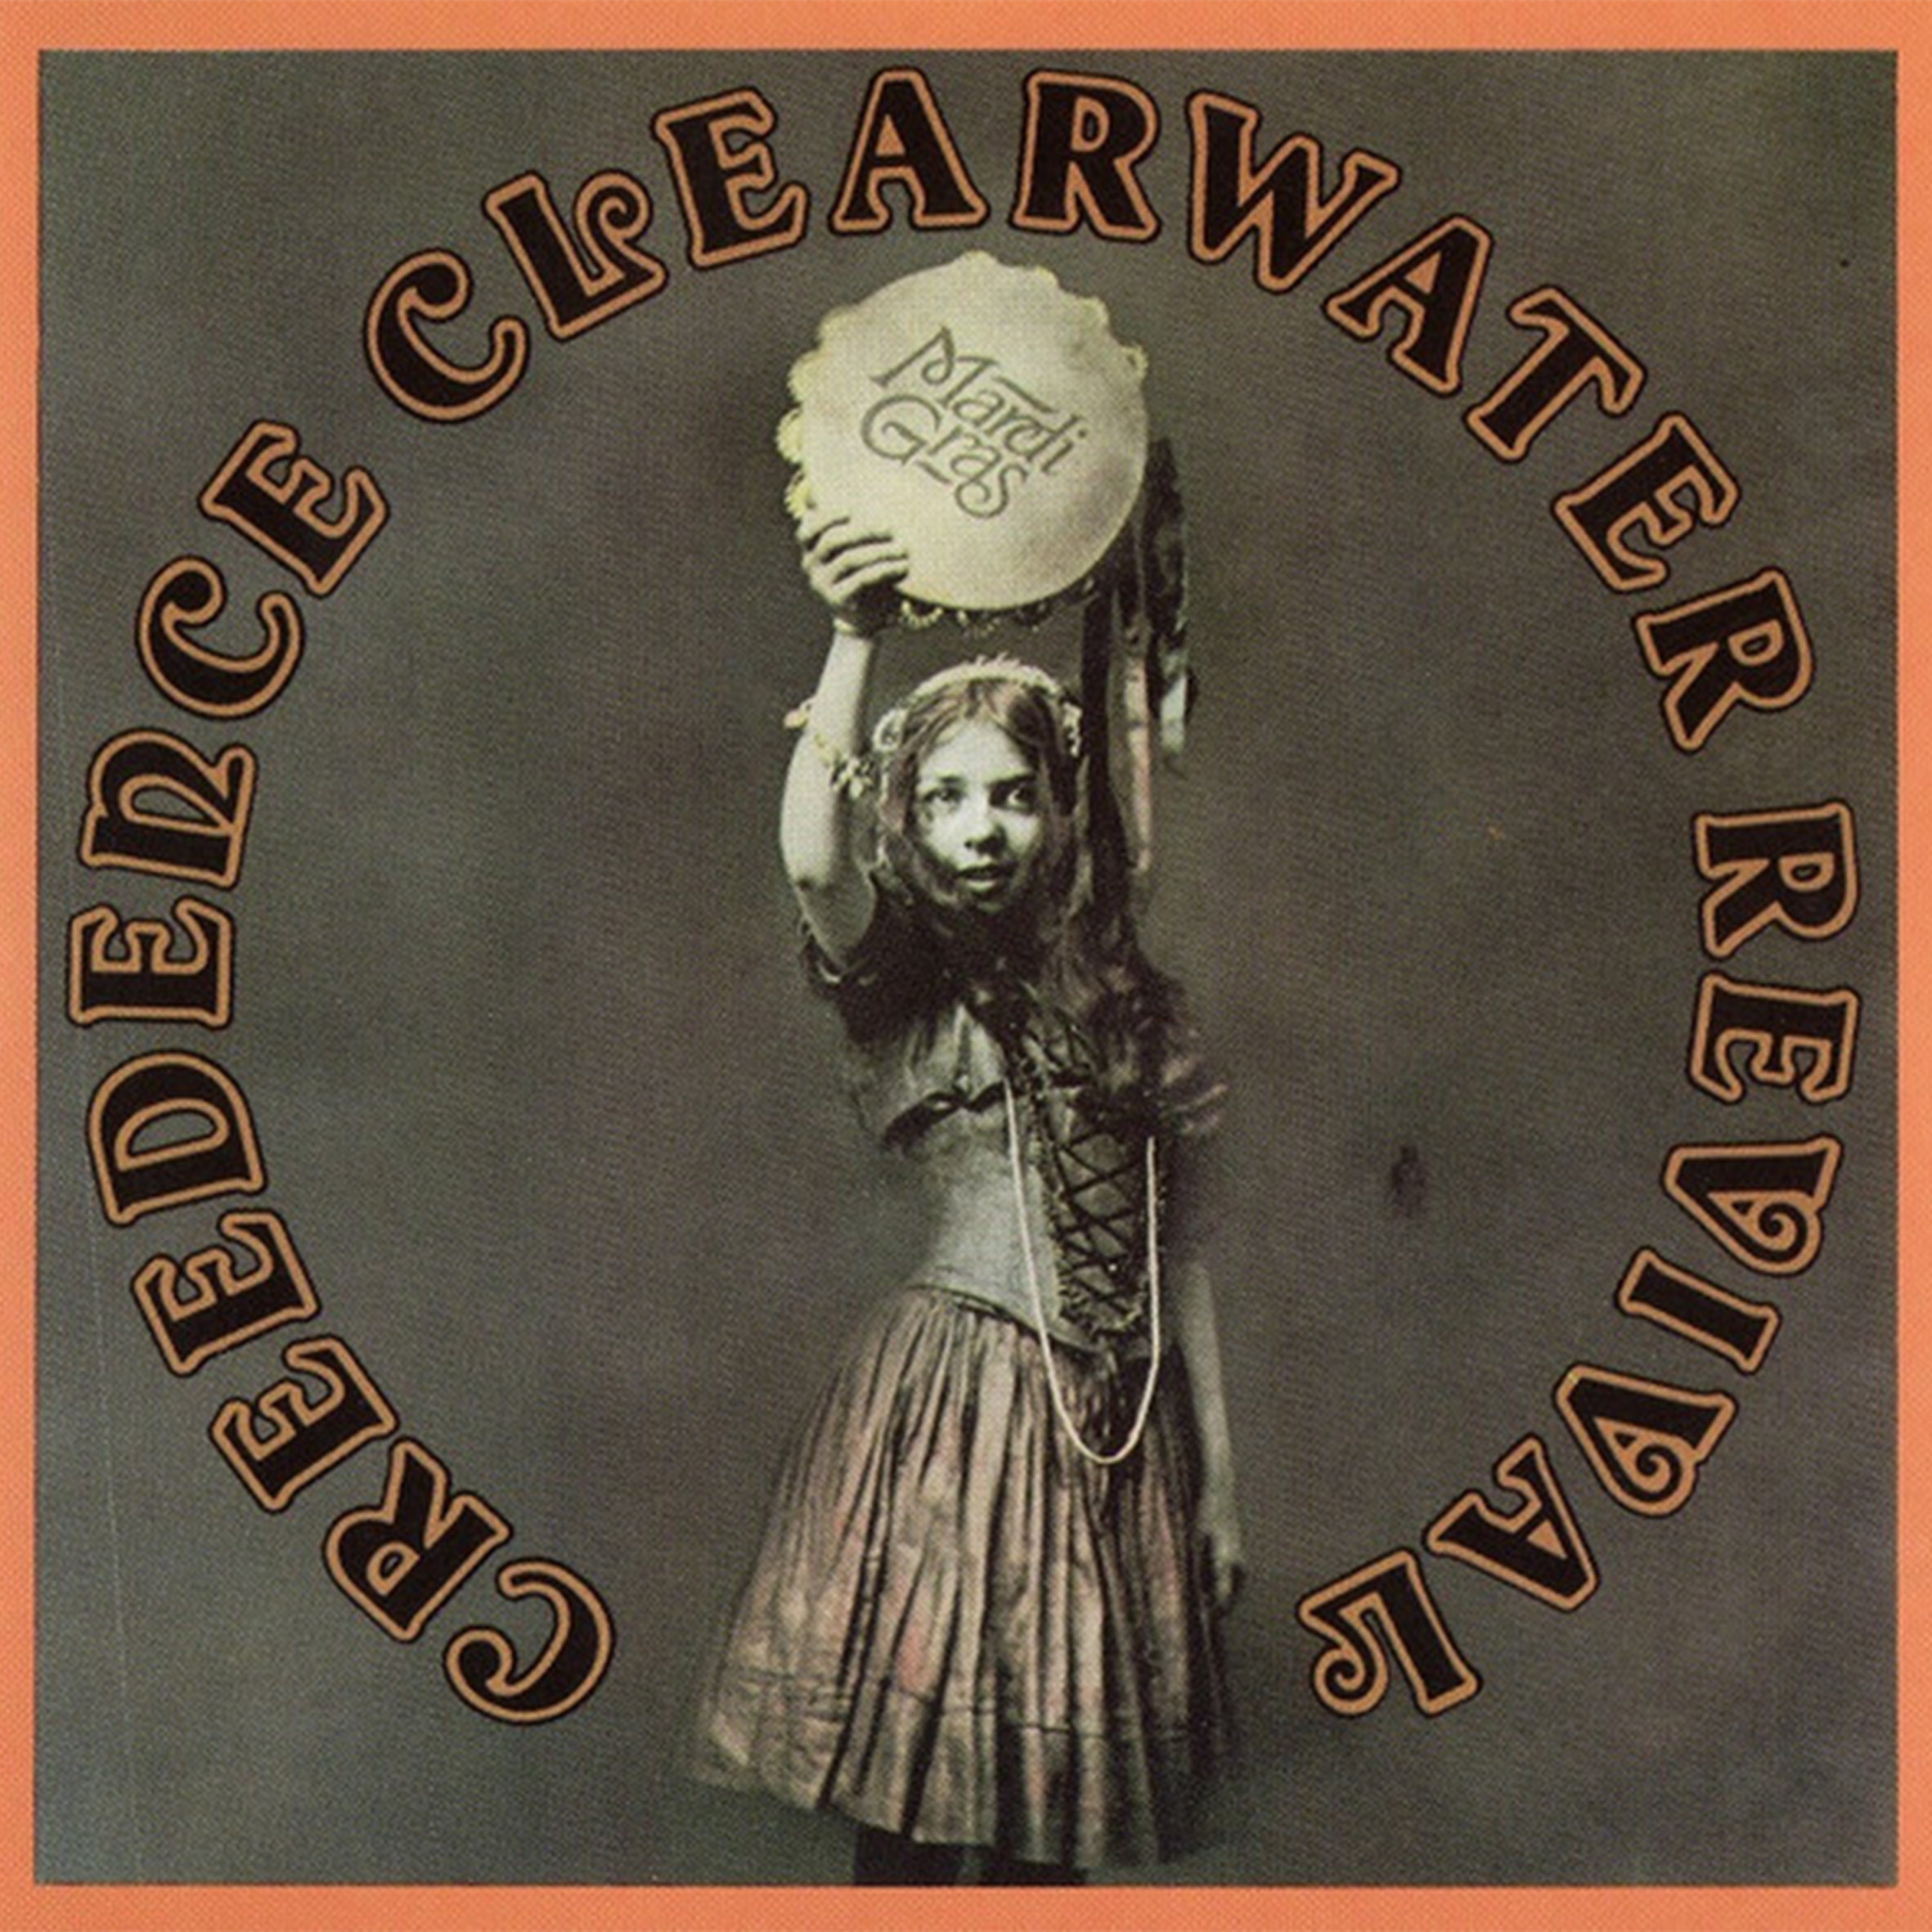 CD - Creedence Clearwater Revival - Mardi Gras (UK)